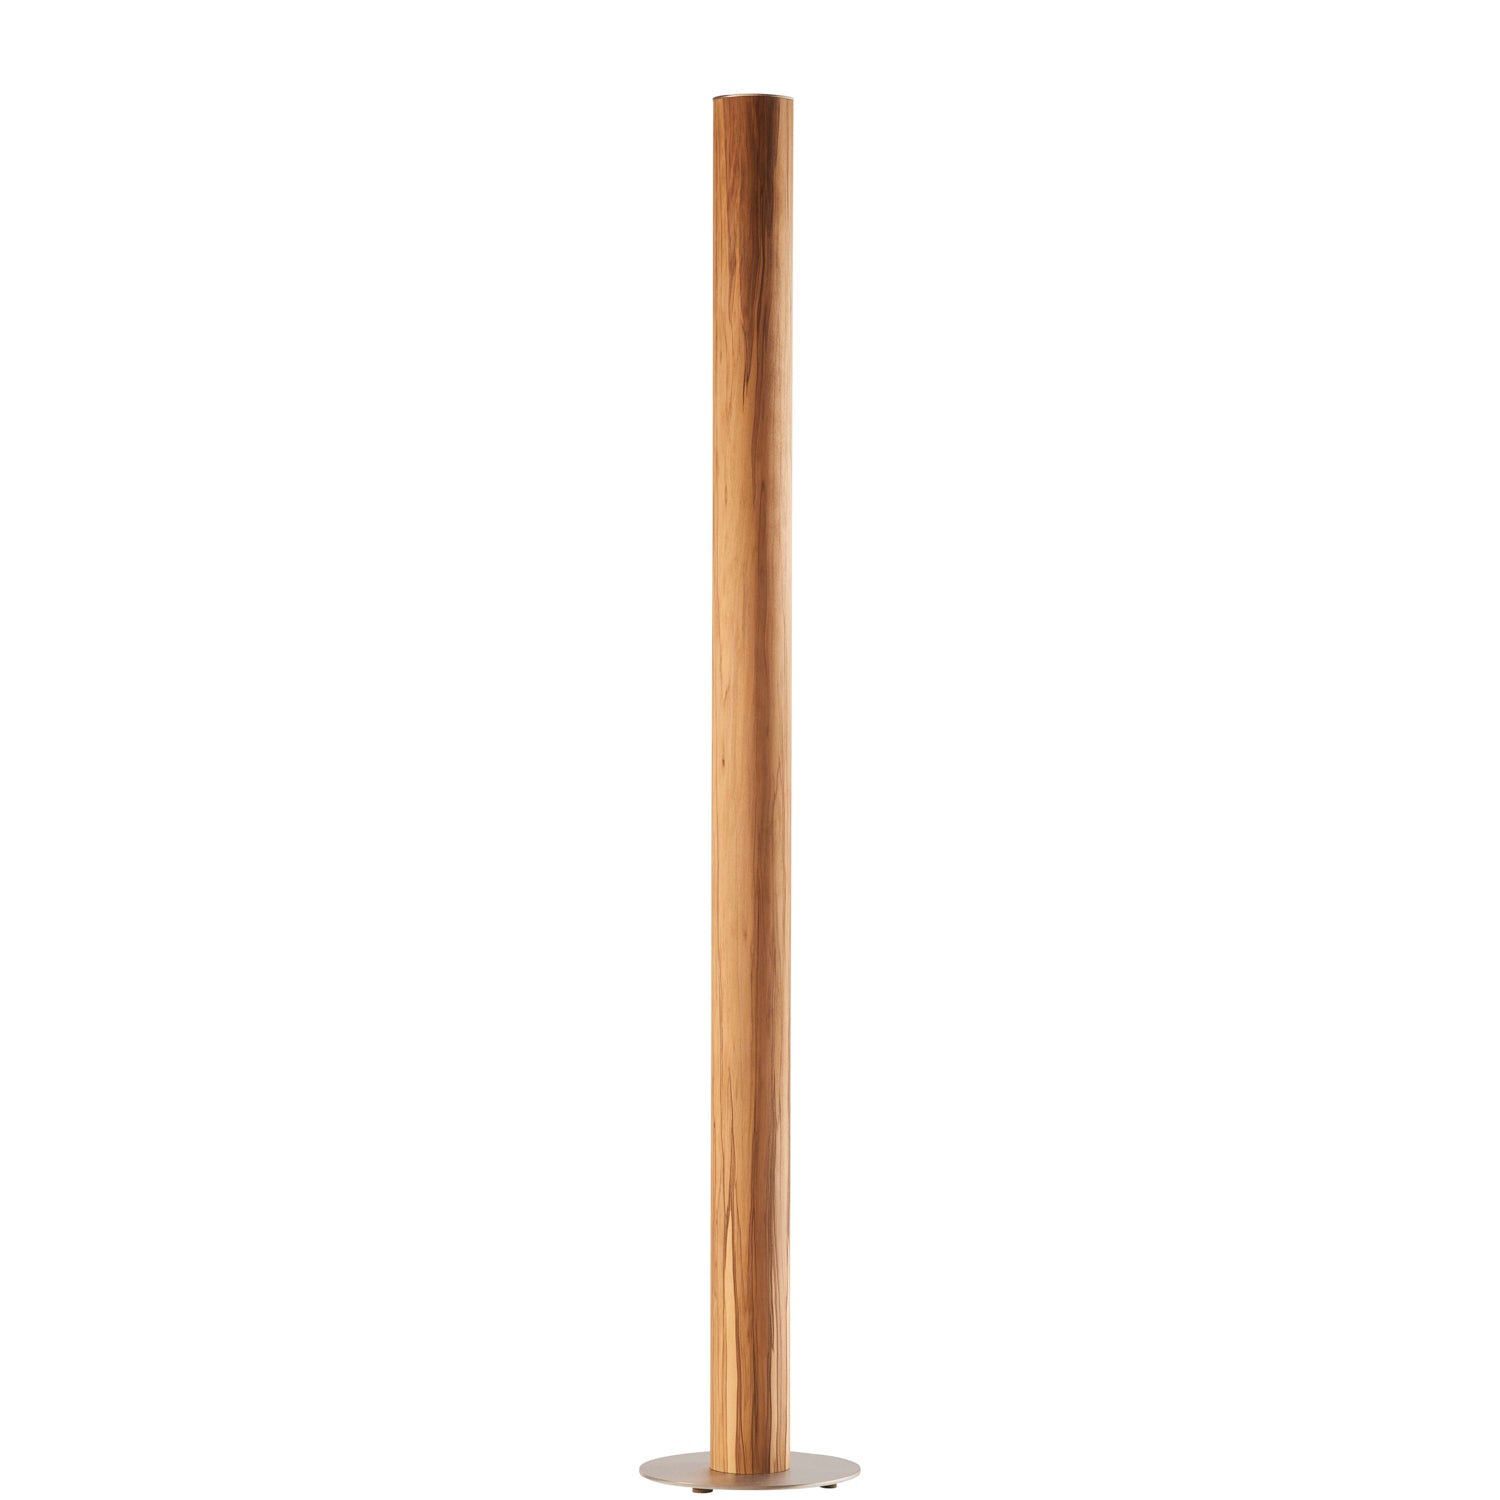 Wood lamp – Gracia | walnut veneer Leuchtnatur lamp floor